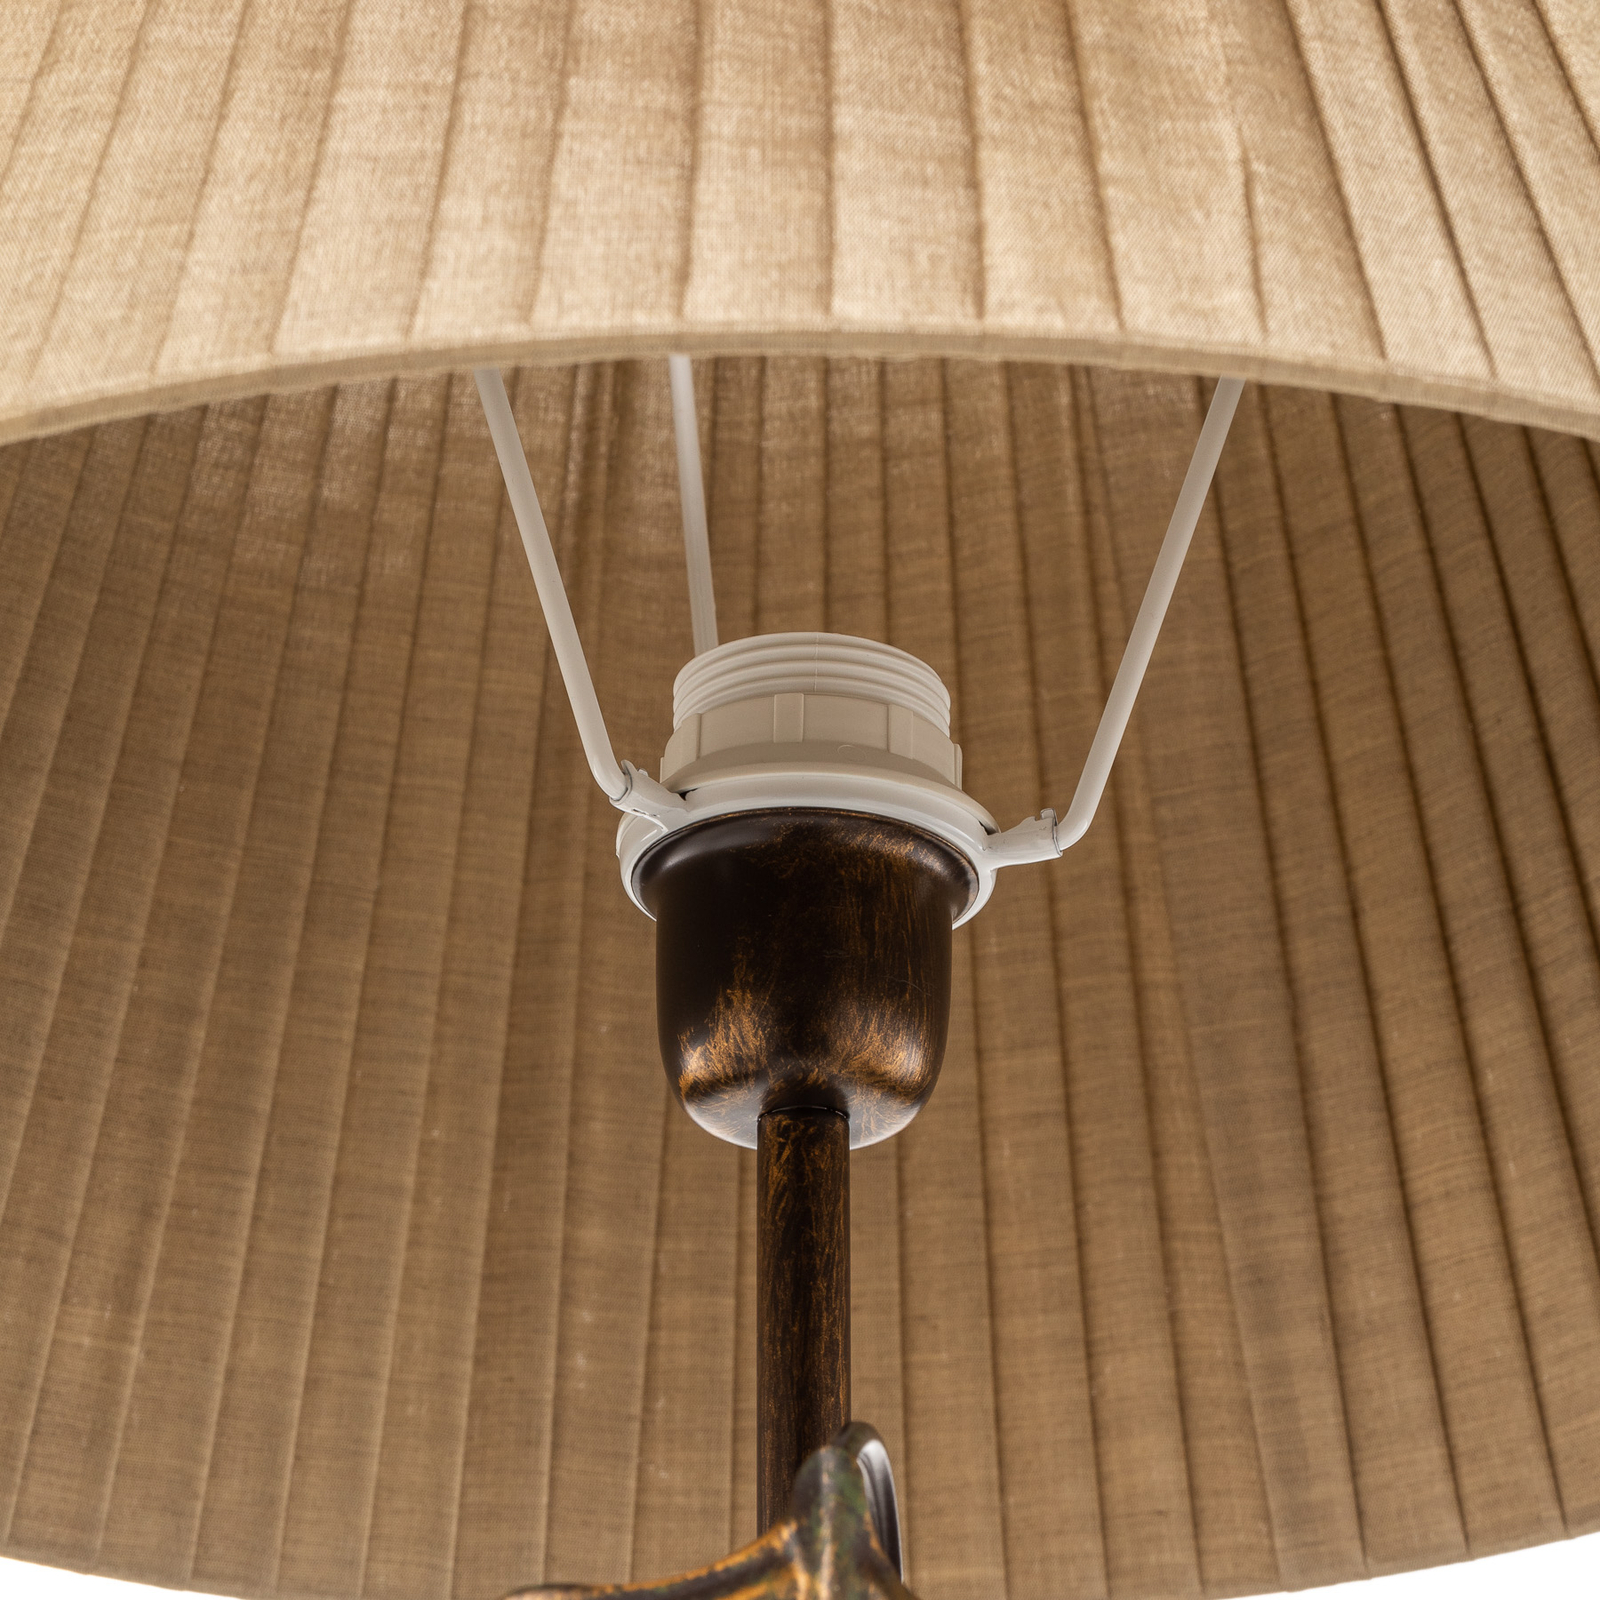 Quercia floor lamp, fabric lampshade, oak leaves